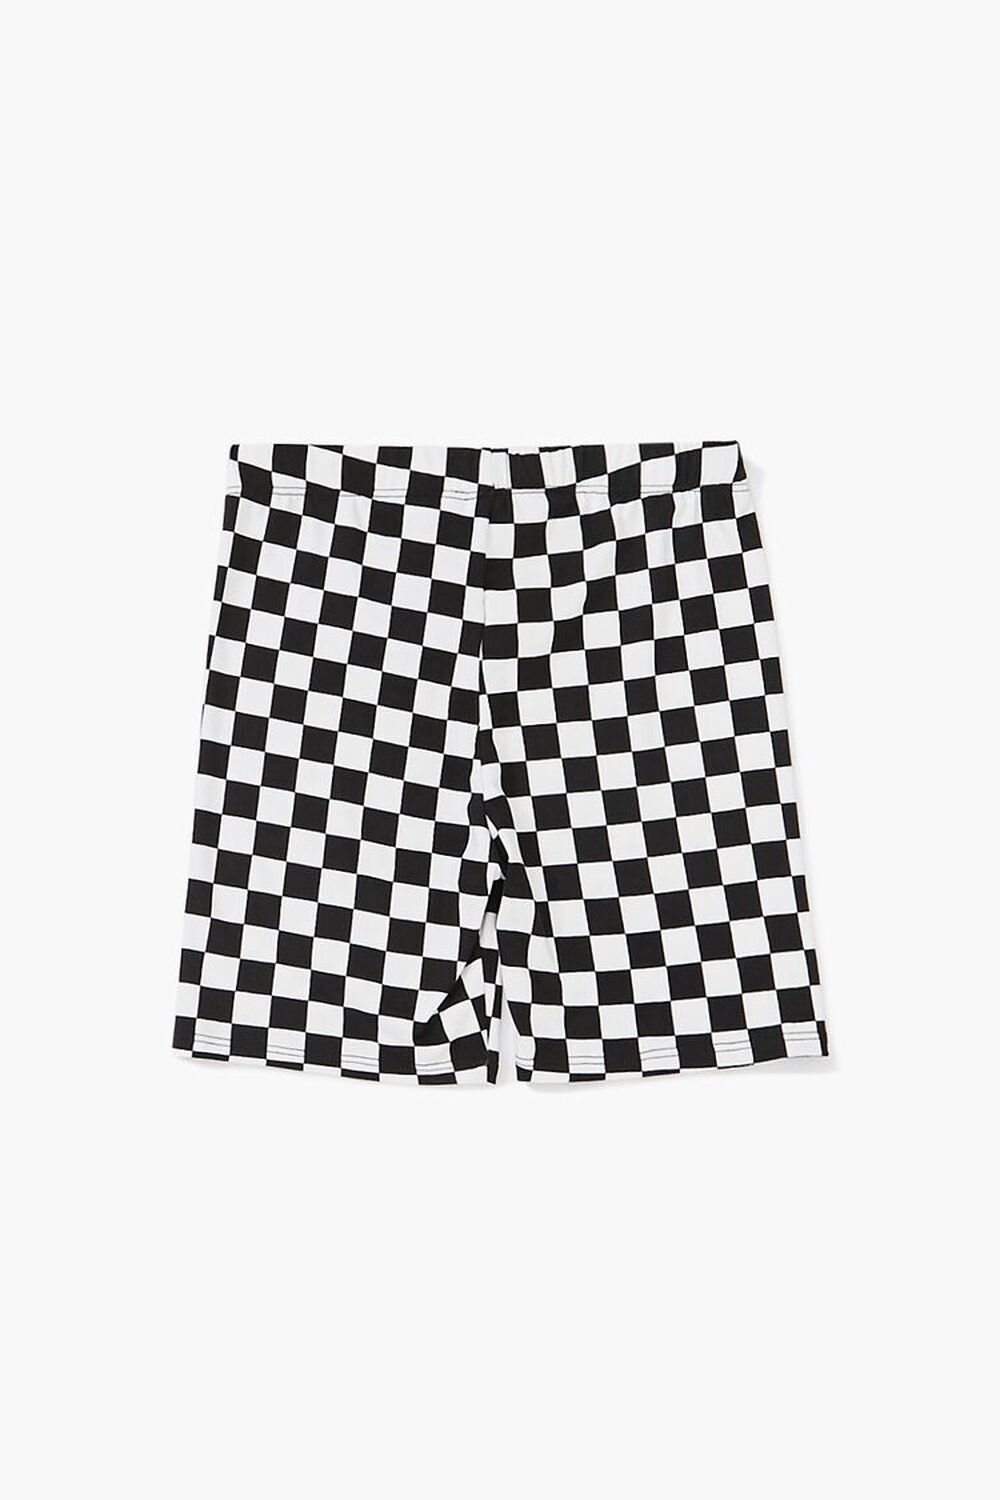 BLACK/WHITE Girls Checkered Print Shorts (Kids), image 2